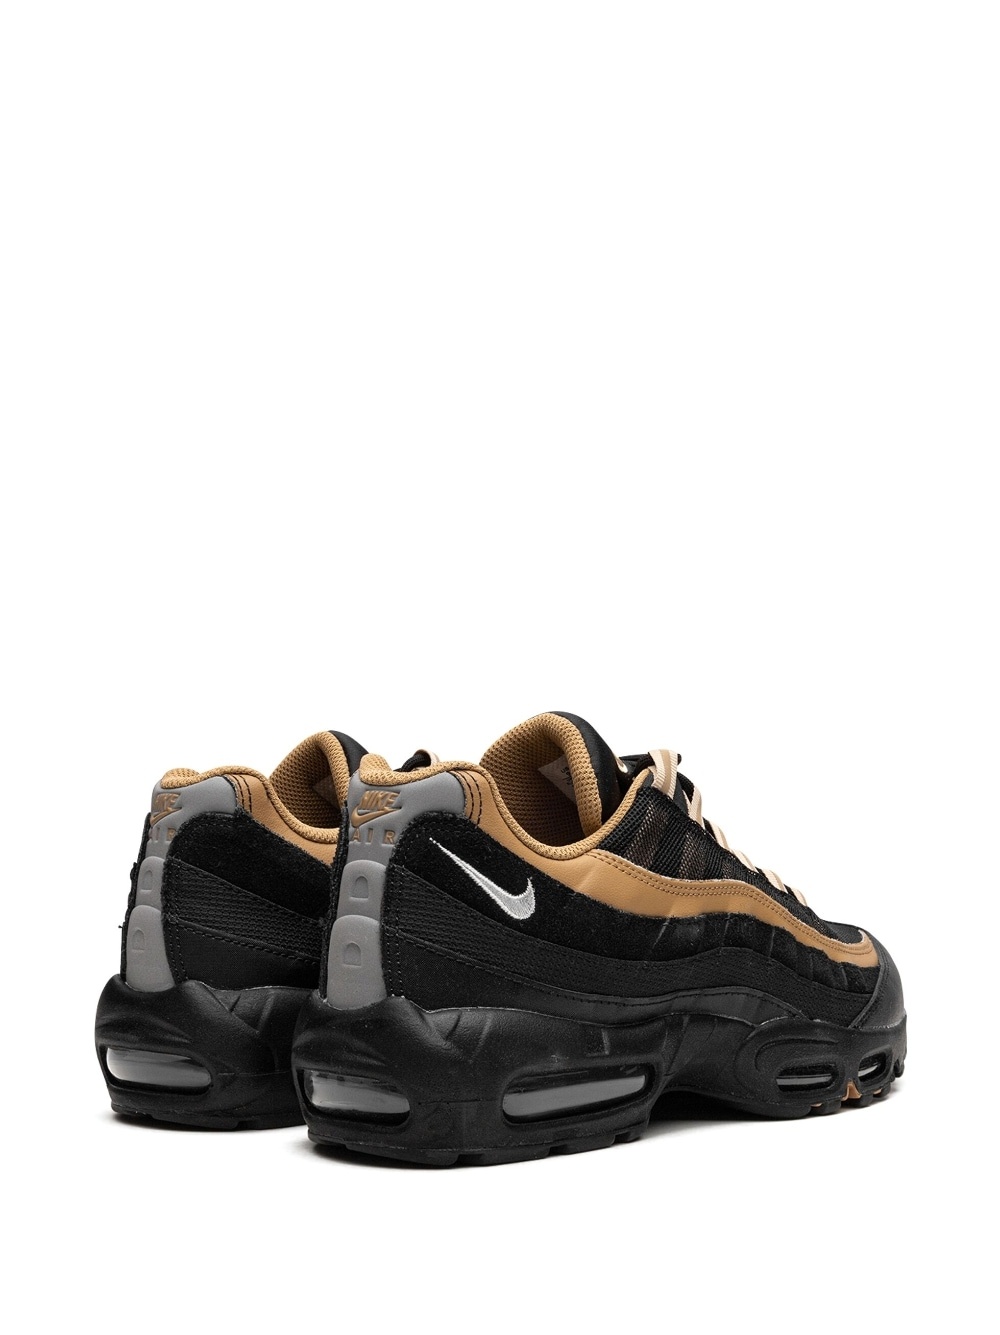 Air Max 95 "Black Elemental Gold" sneakers - 3